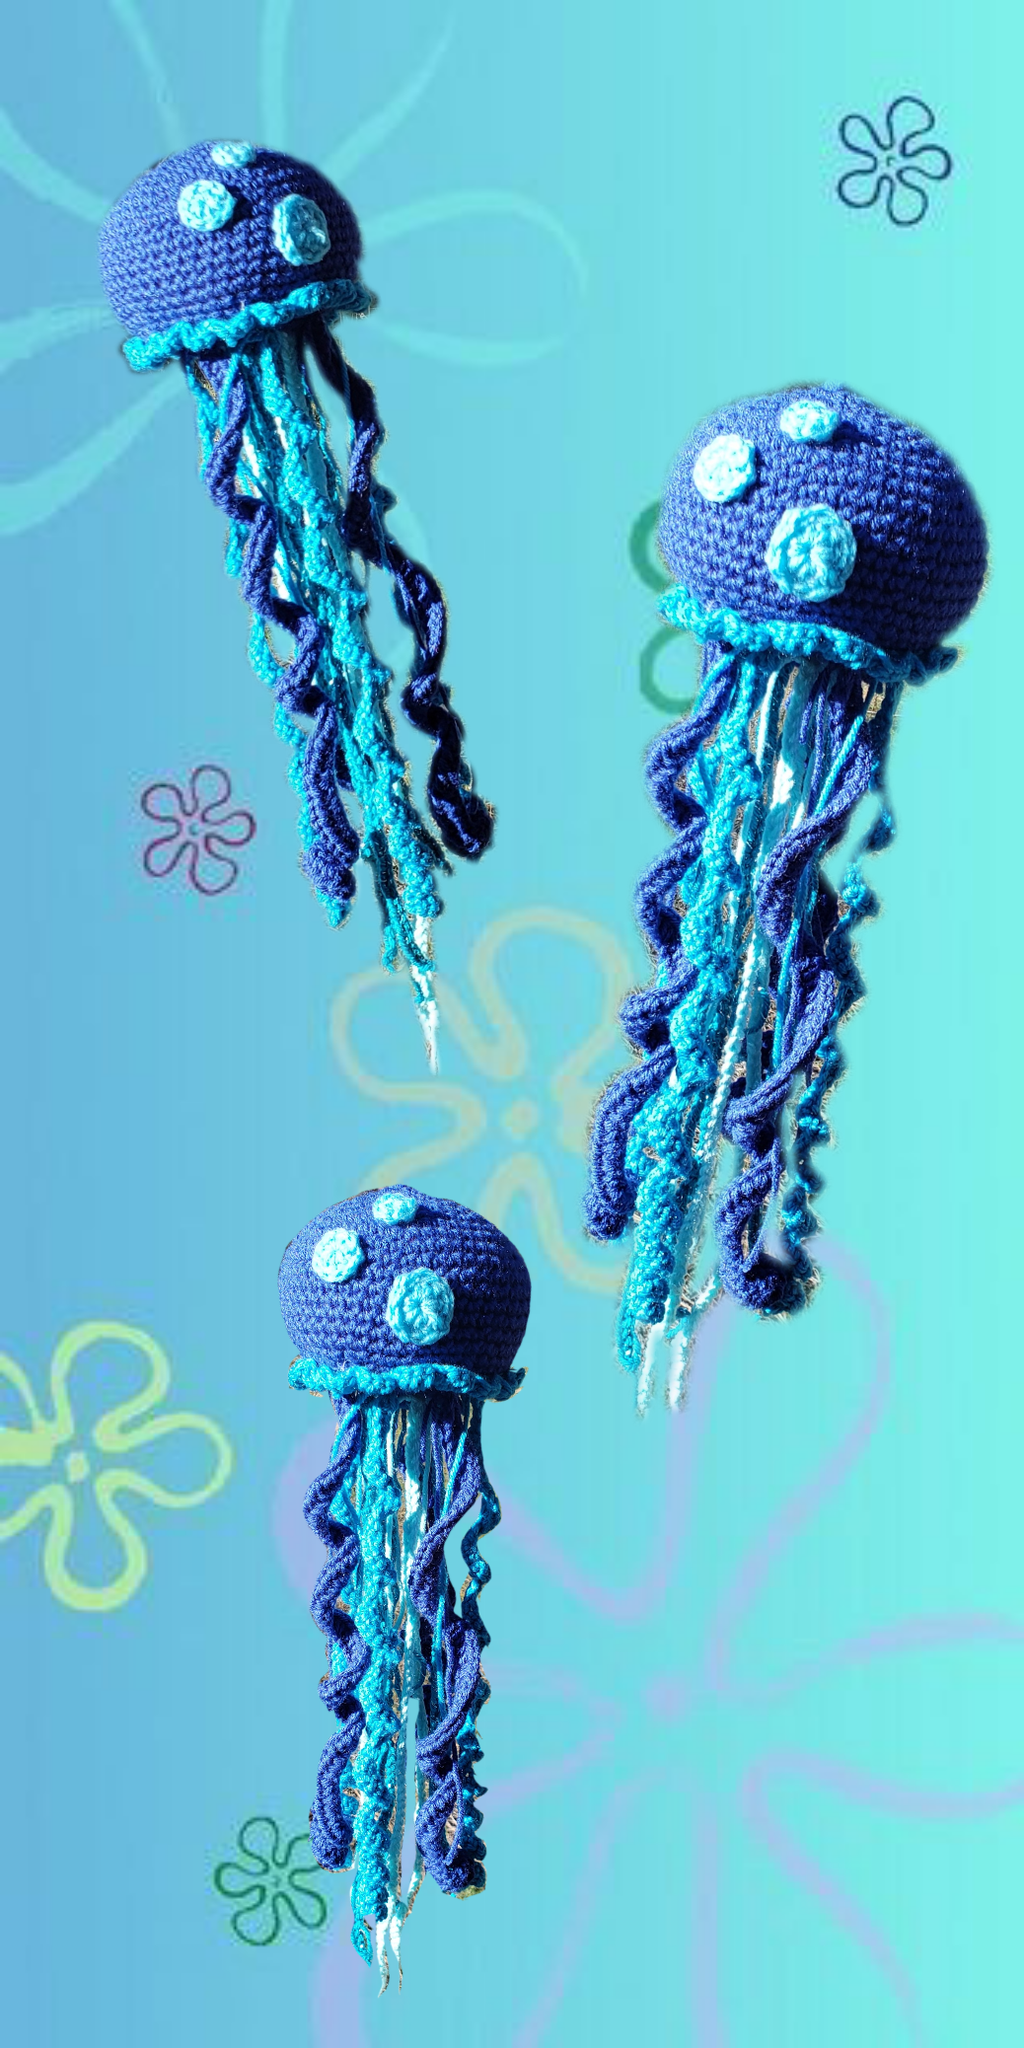 Blue Jellyfish from Spongebob – A Creative Wonderland